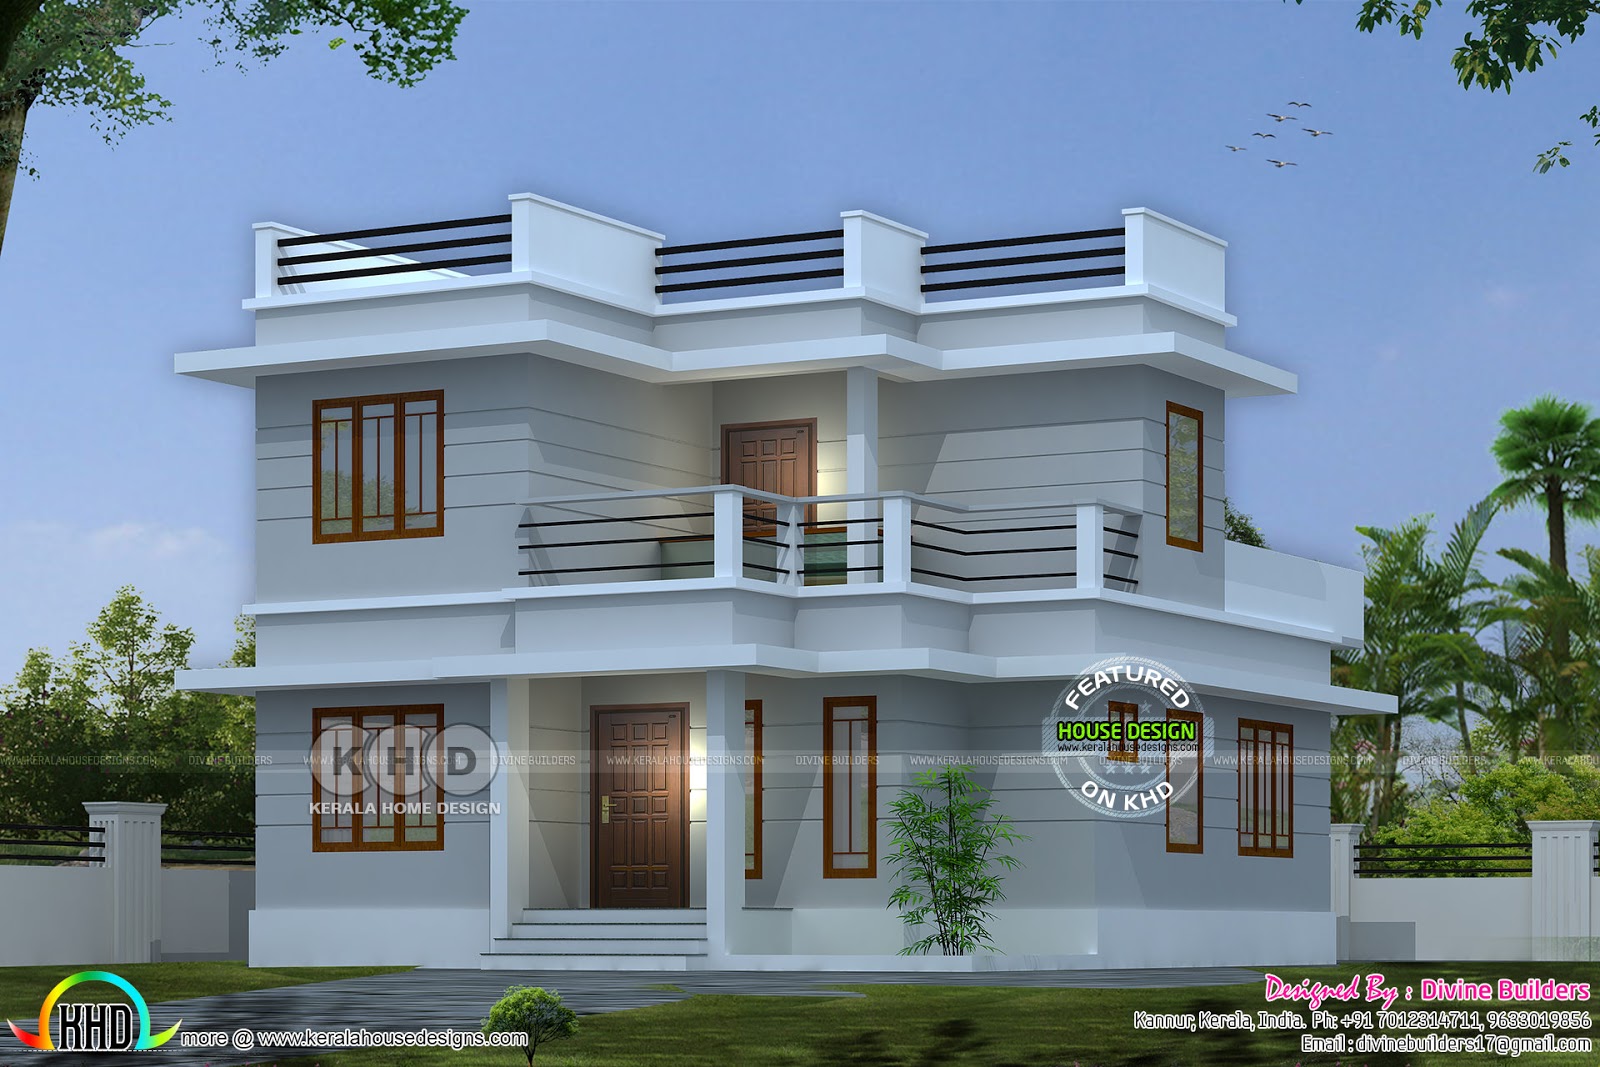  47 lakhs cost  estimated  modern home  2516 sq ft Kerala 